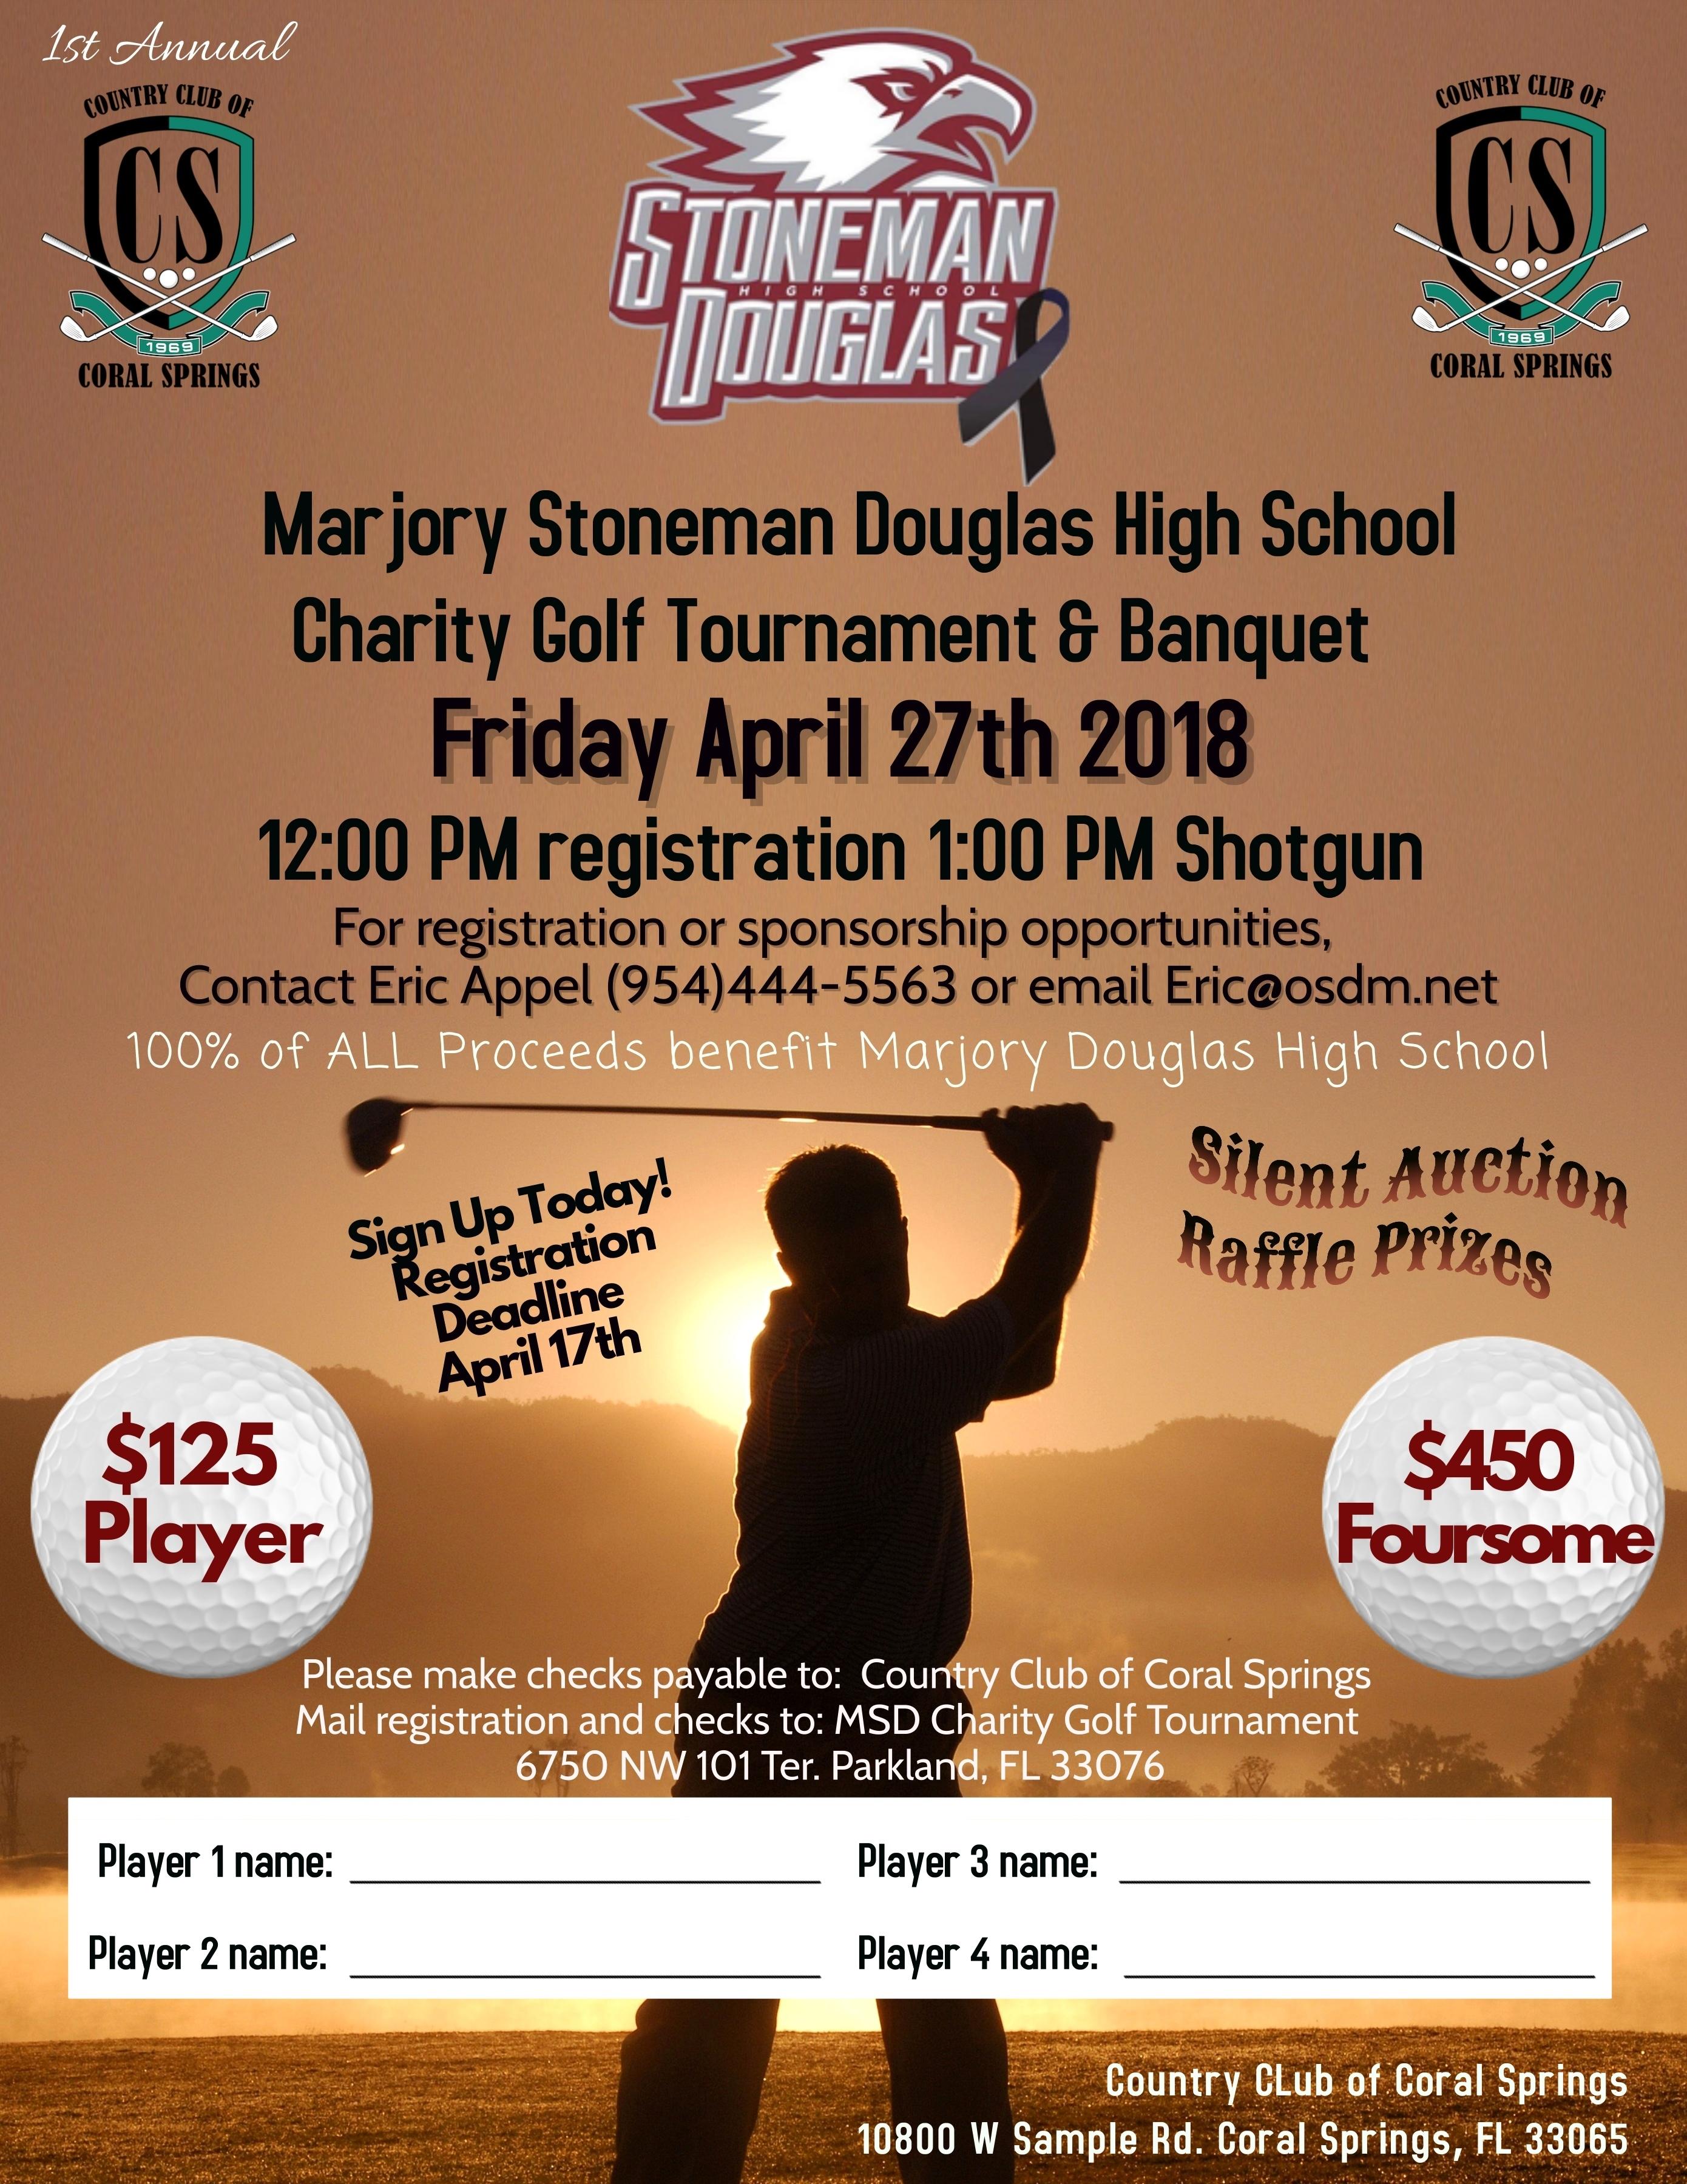 1st Annual Marjory Stoneman Douglas Charity Golf Tournament & Banquet